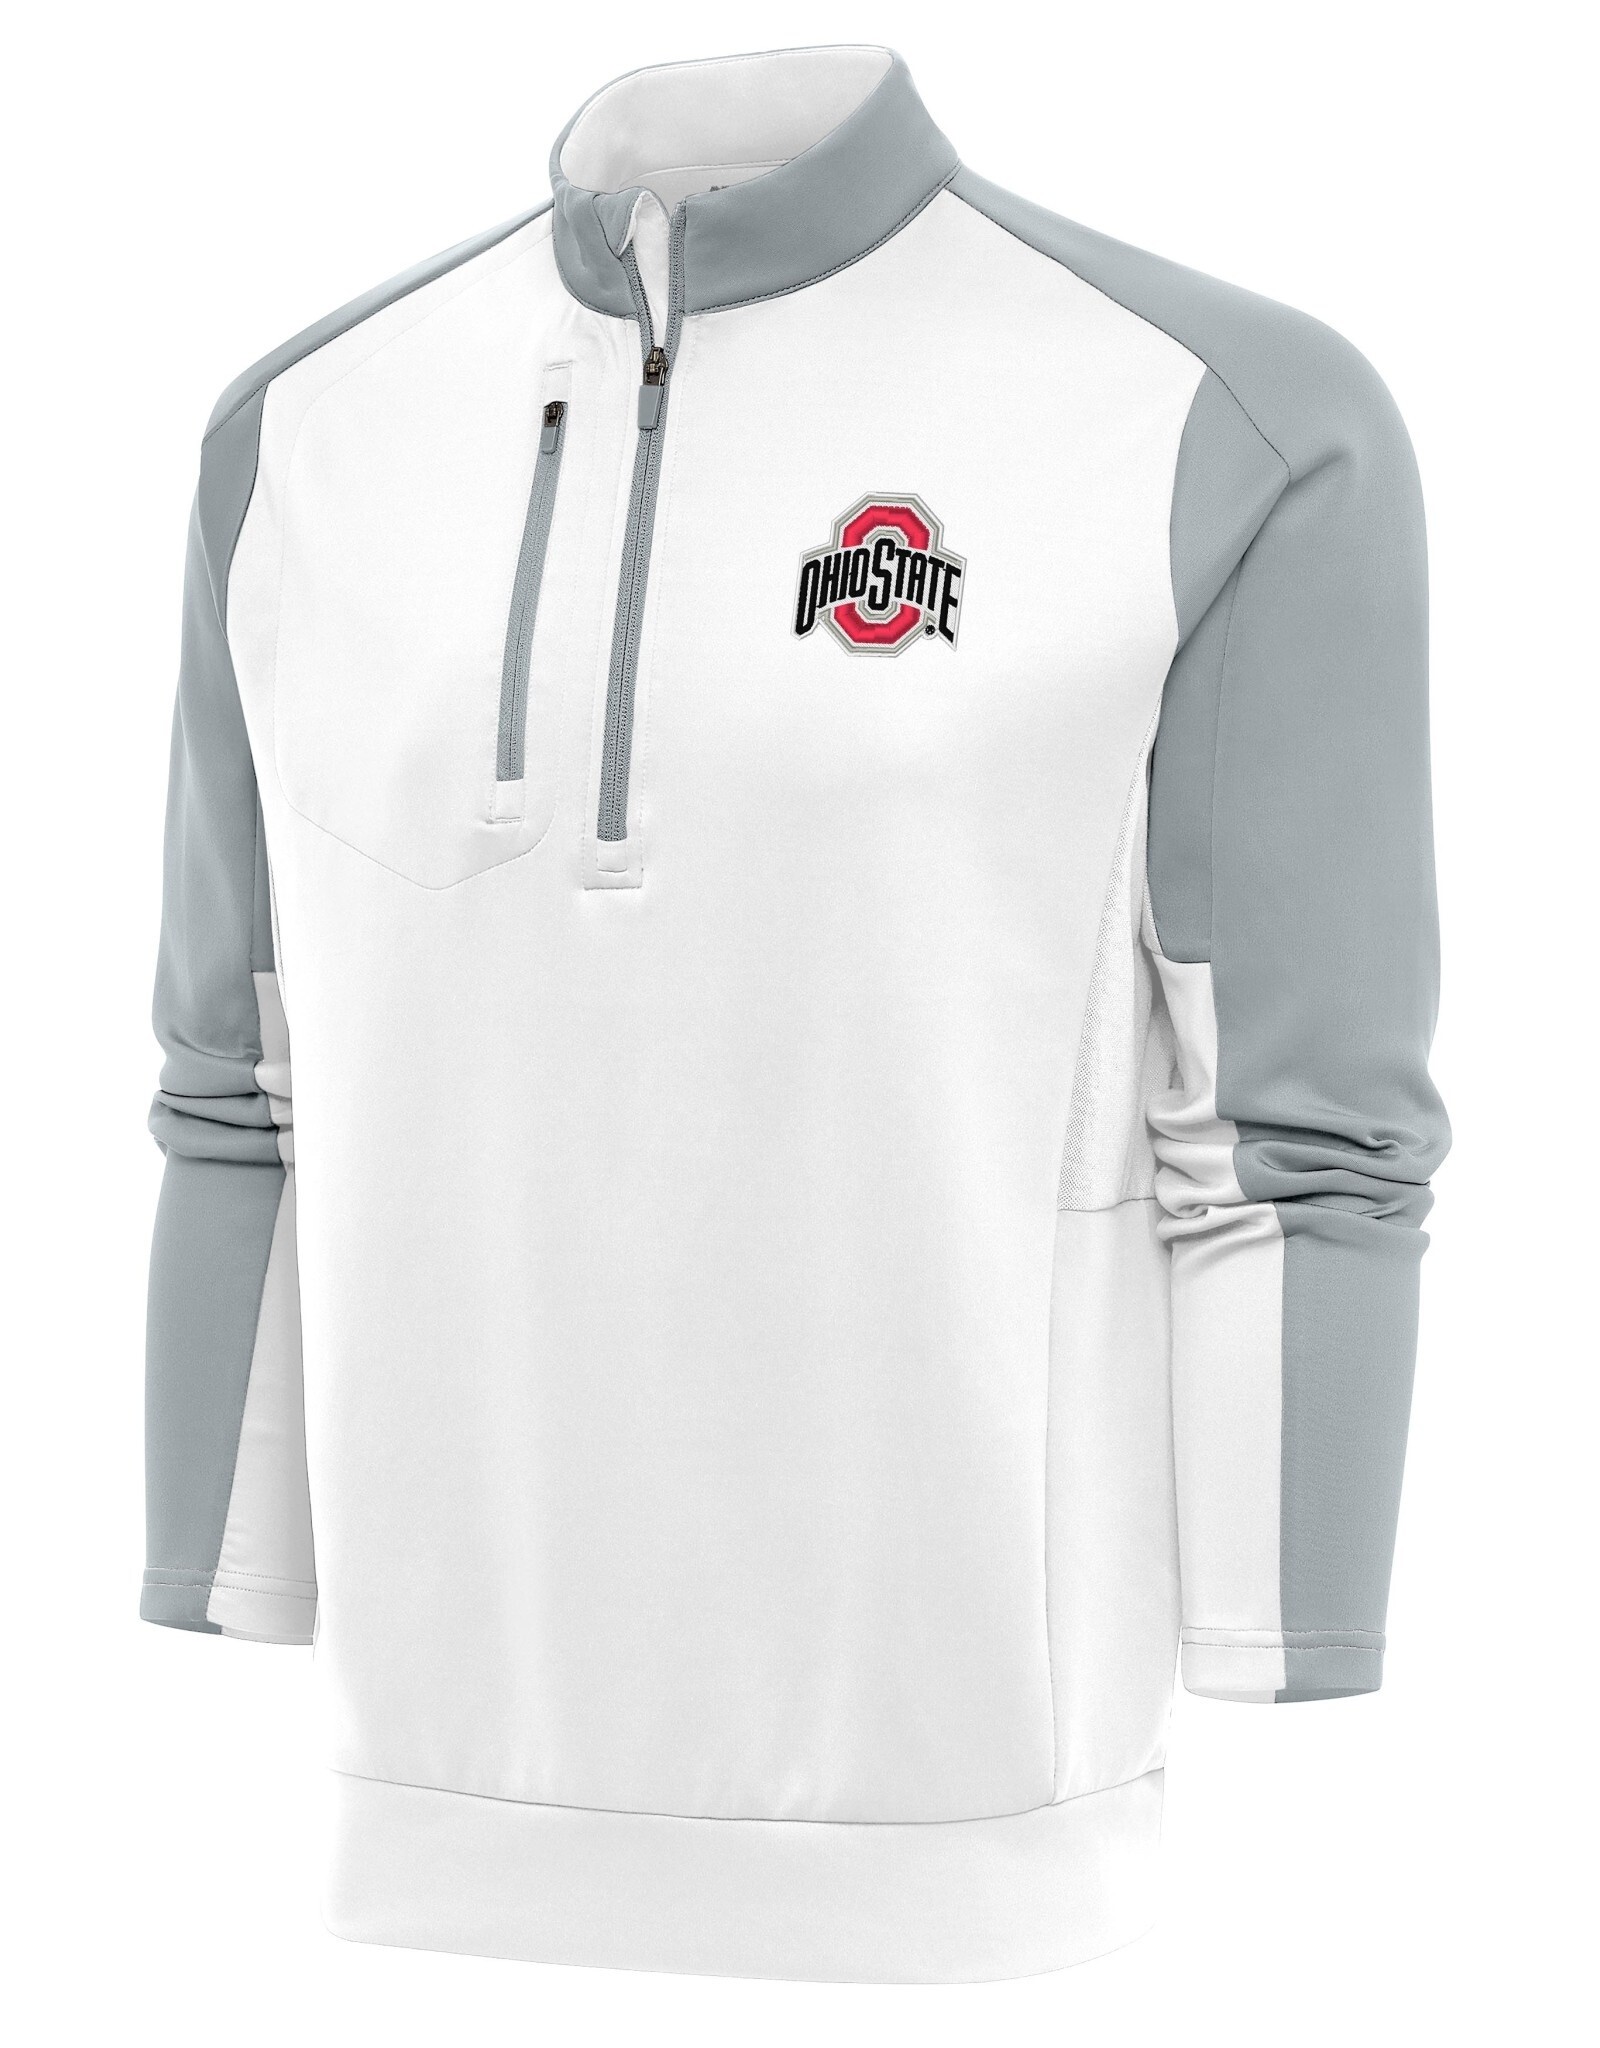 ANTIGUA Ohio State Buckeyes Men's Team Quarter Zip Pullover Top - White/Grey